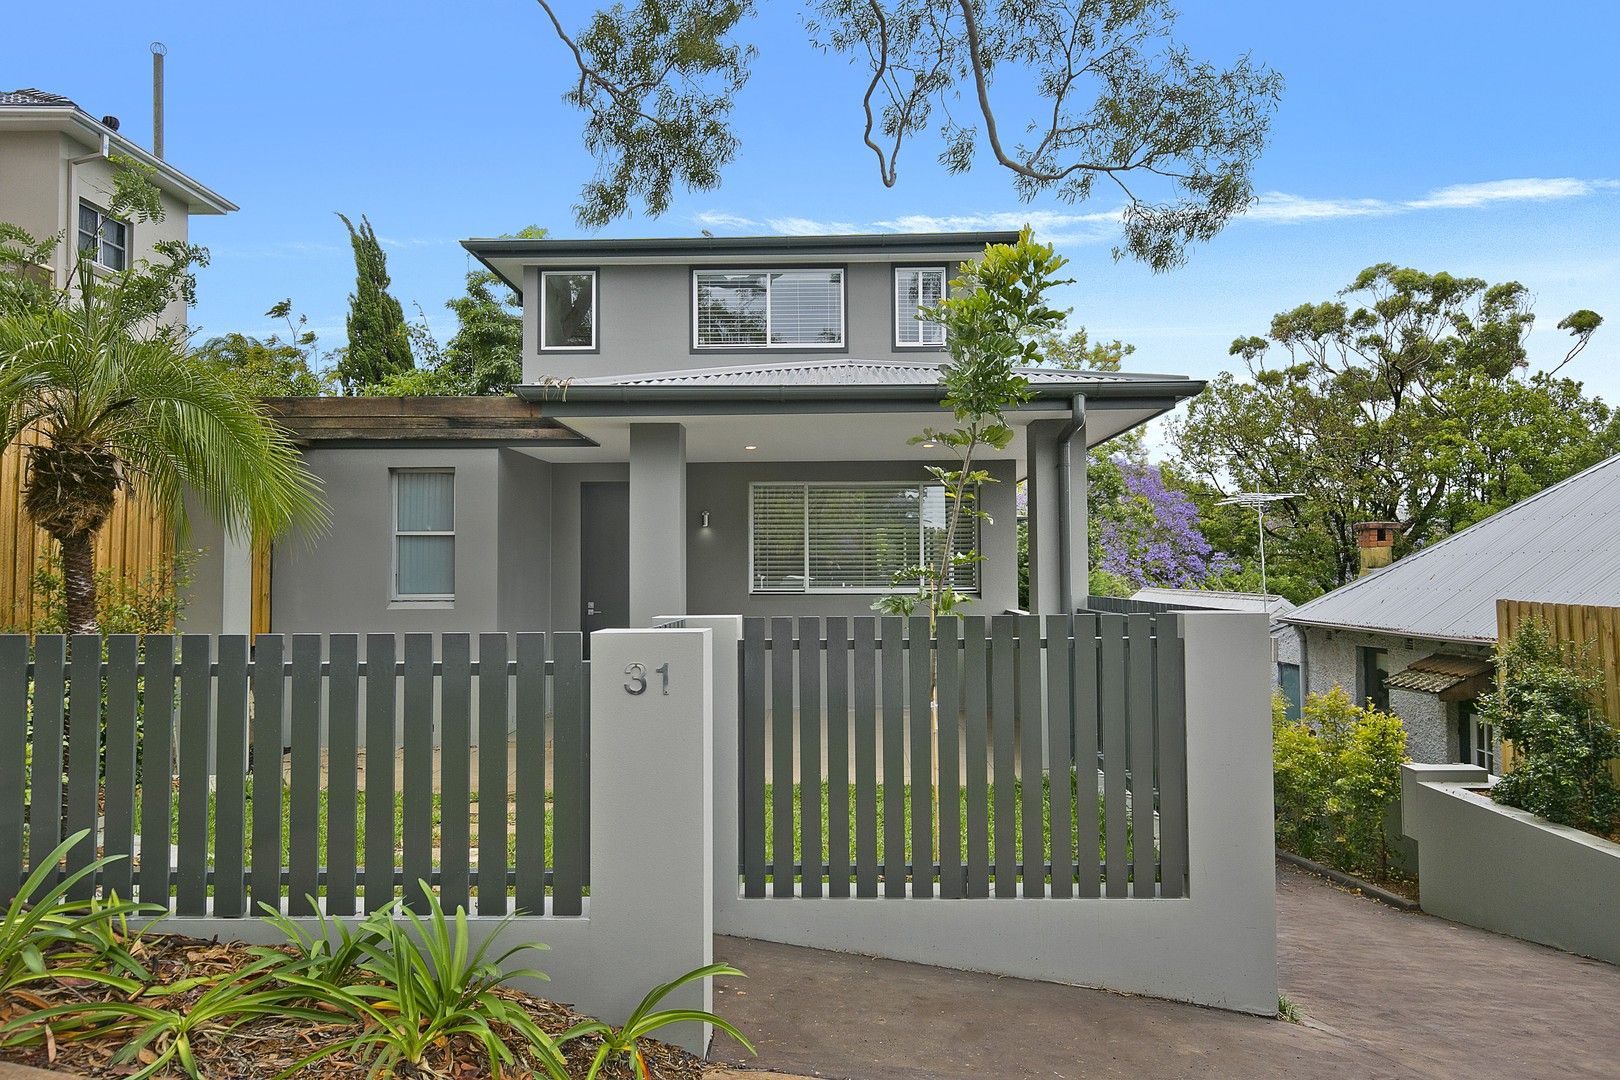 3 bedrooms House in 31 Boyle Street BALGOWLAH NSW, 2093